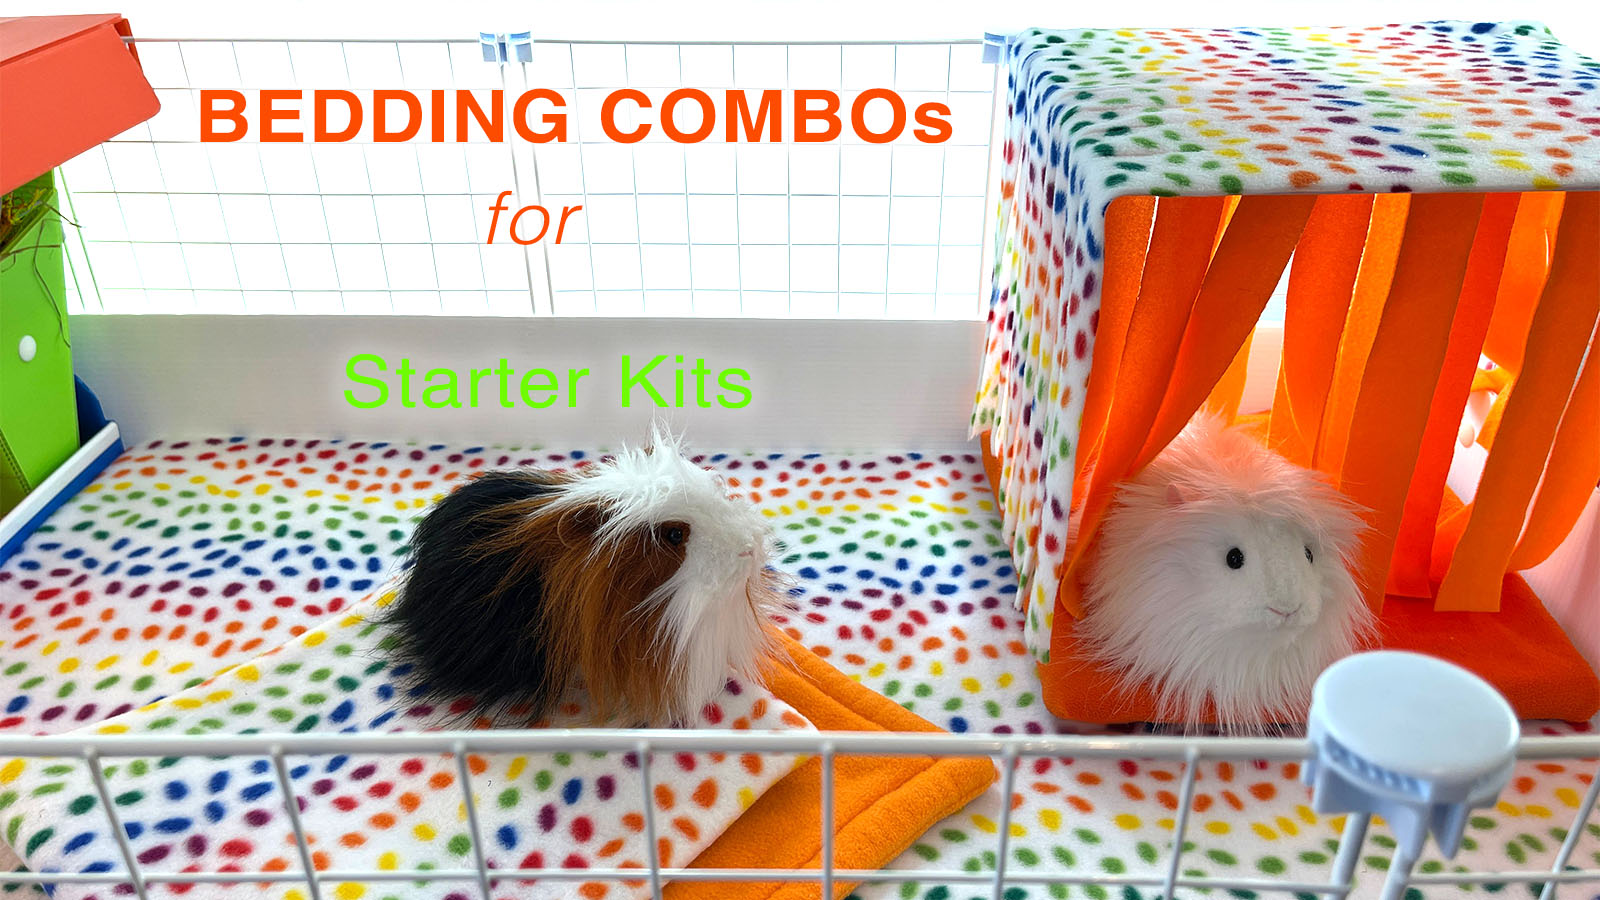 Bedding Combos for Starter kits